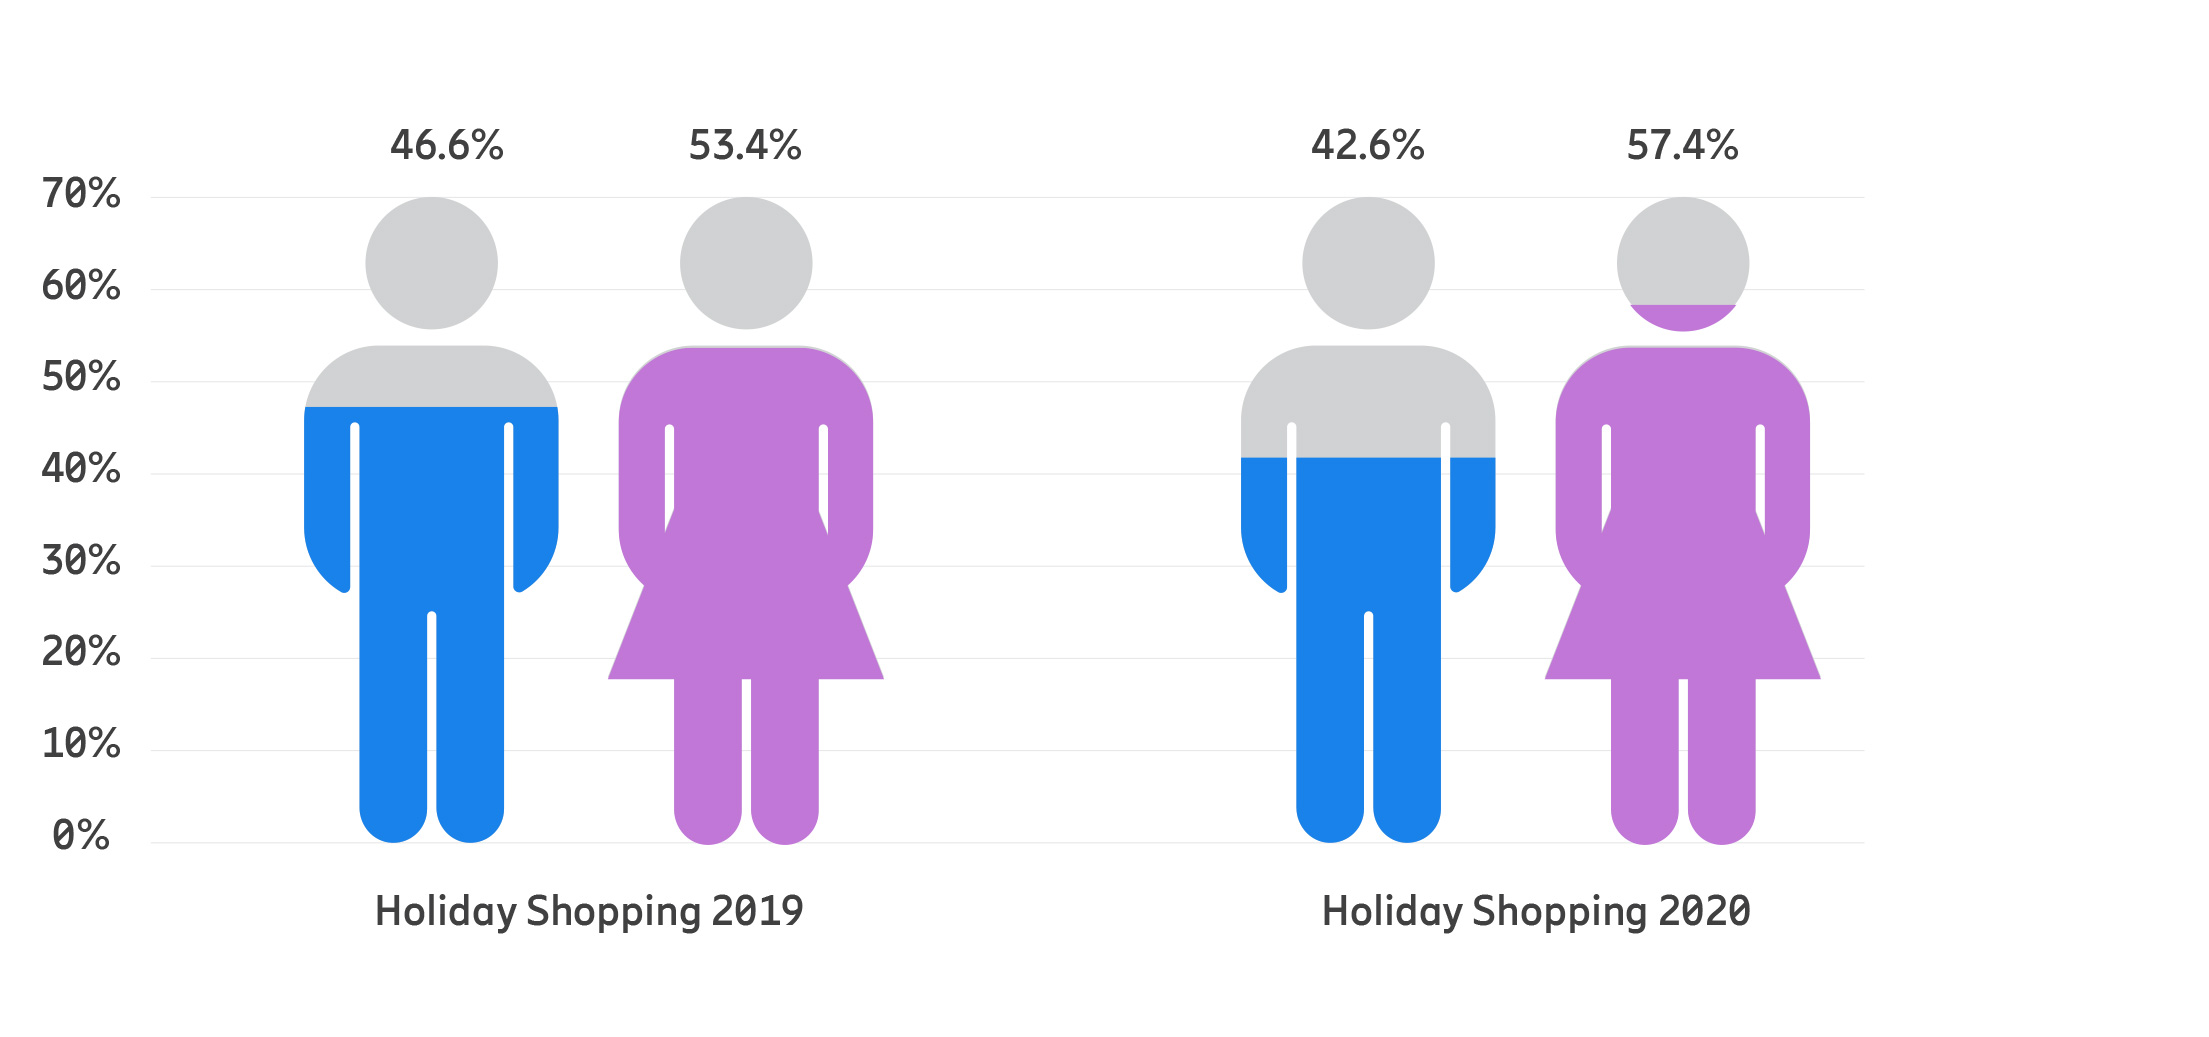 Holiday shopping behavior by gender